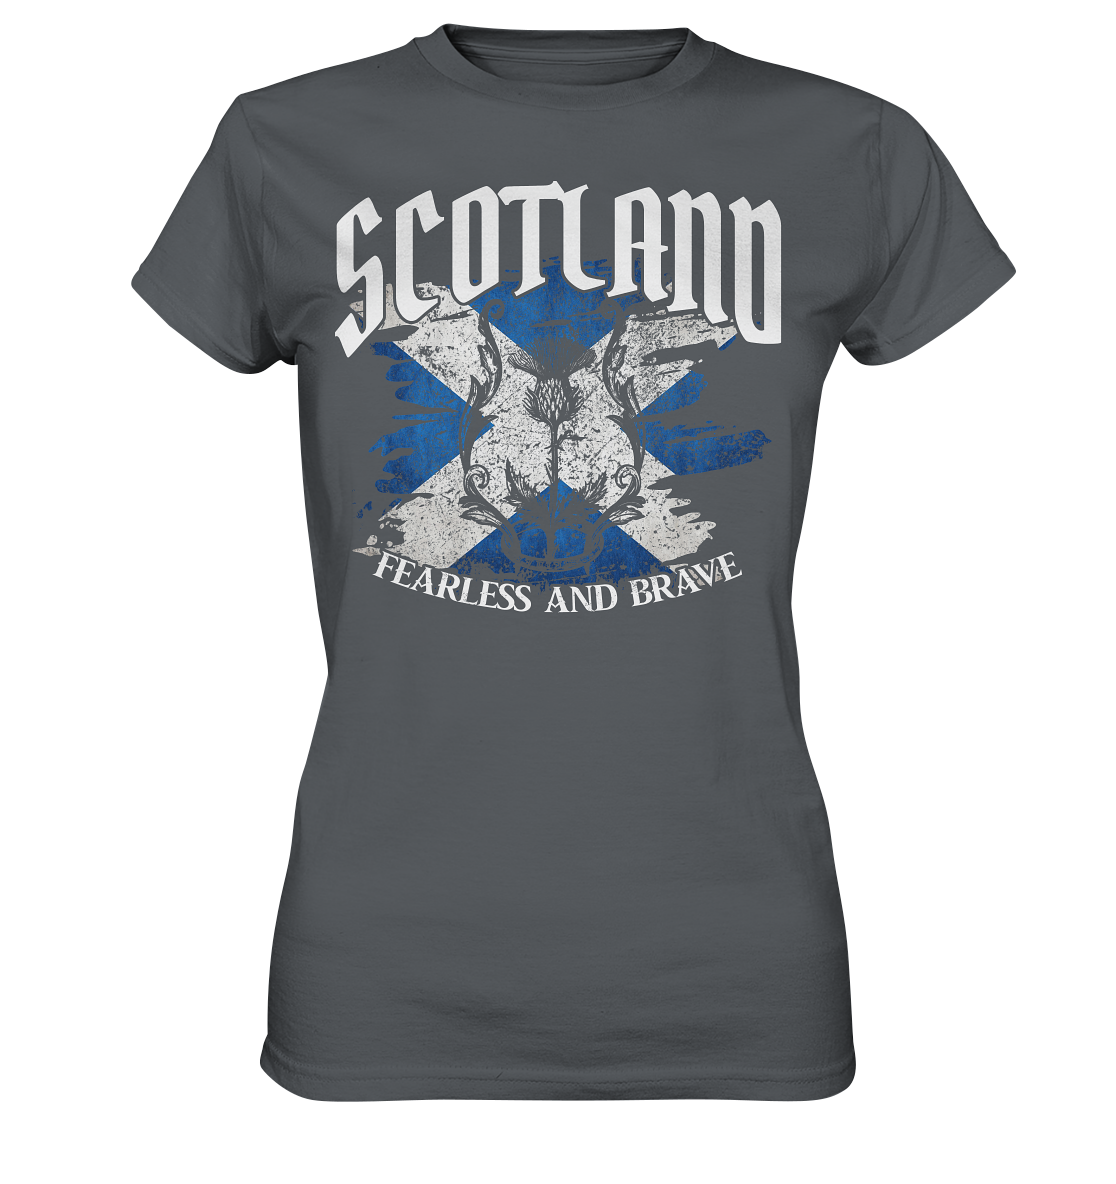 Scotland "Fearless and Brave / Splatter" - Ladies Premium Shirt